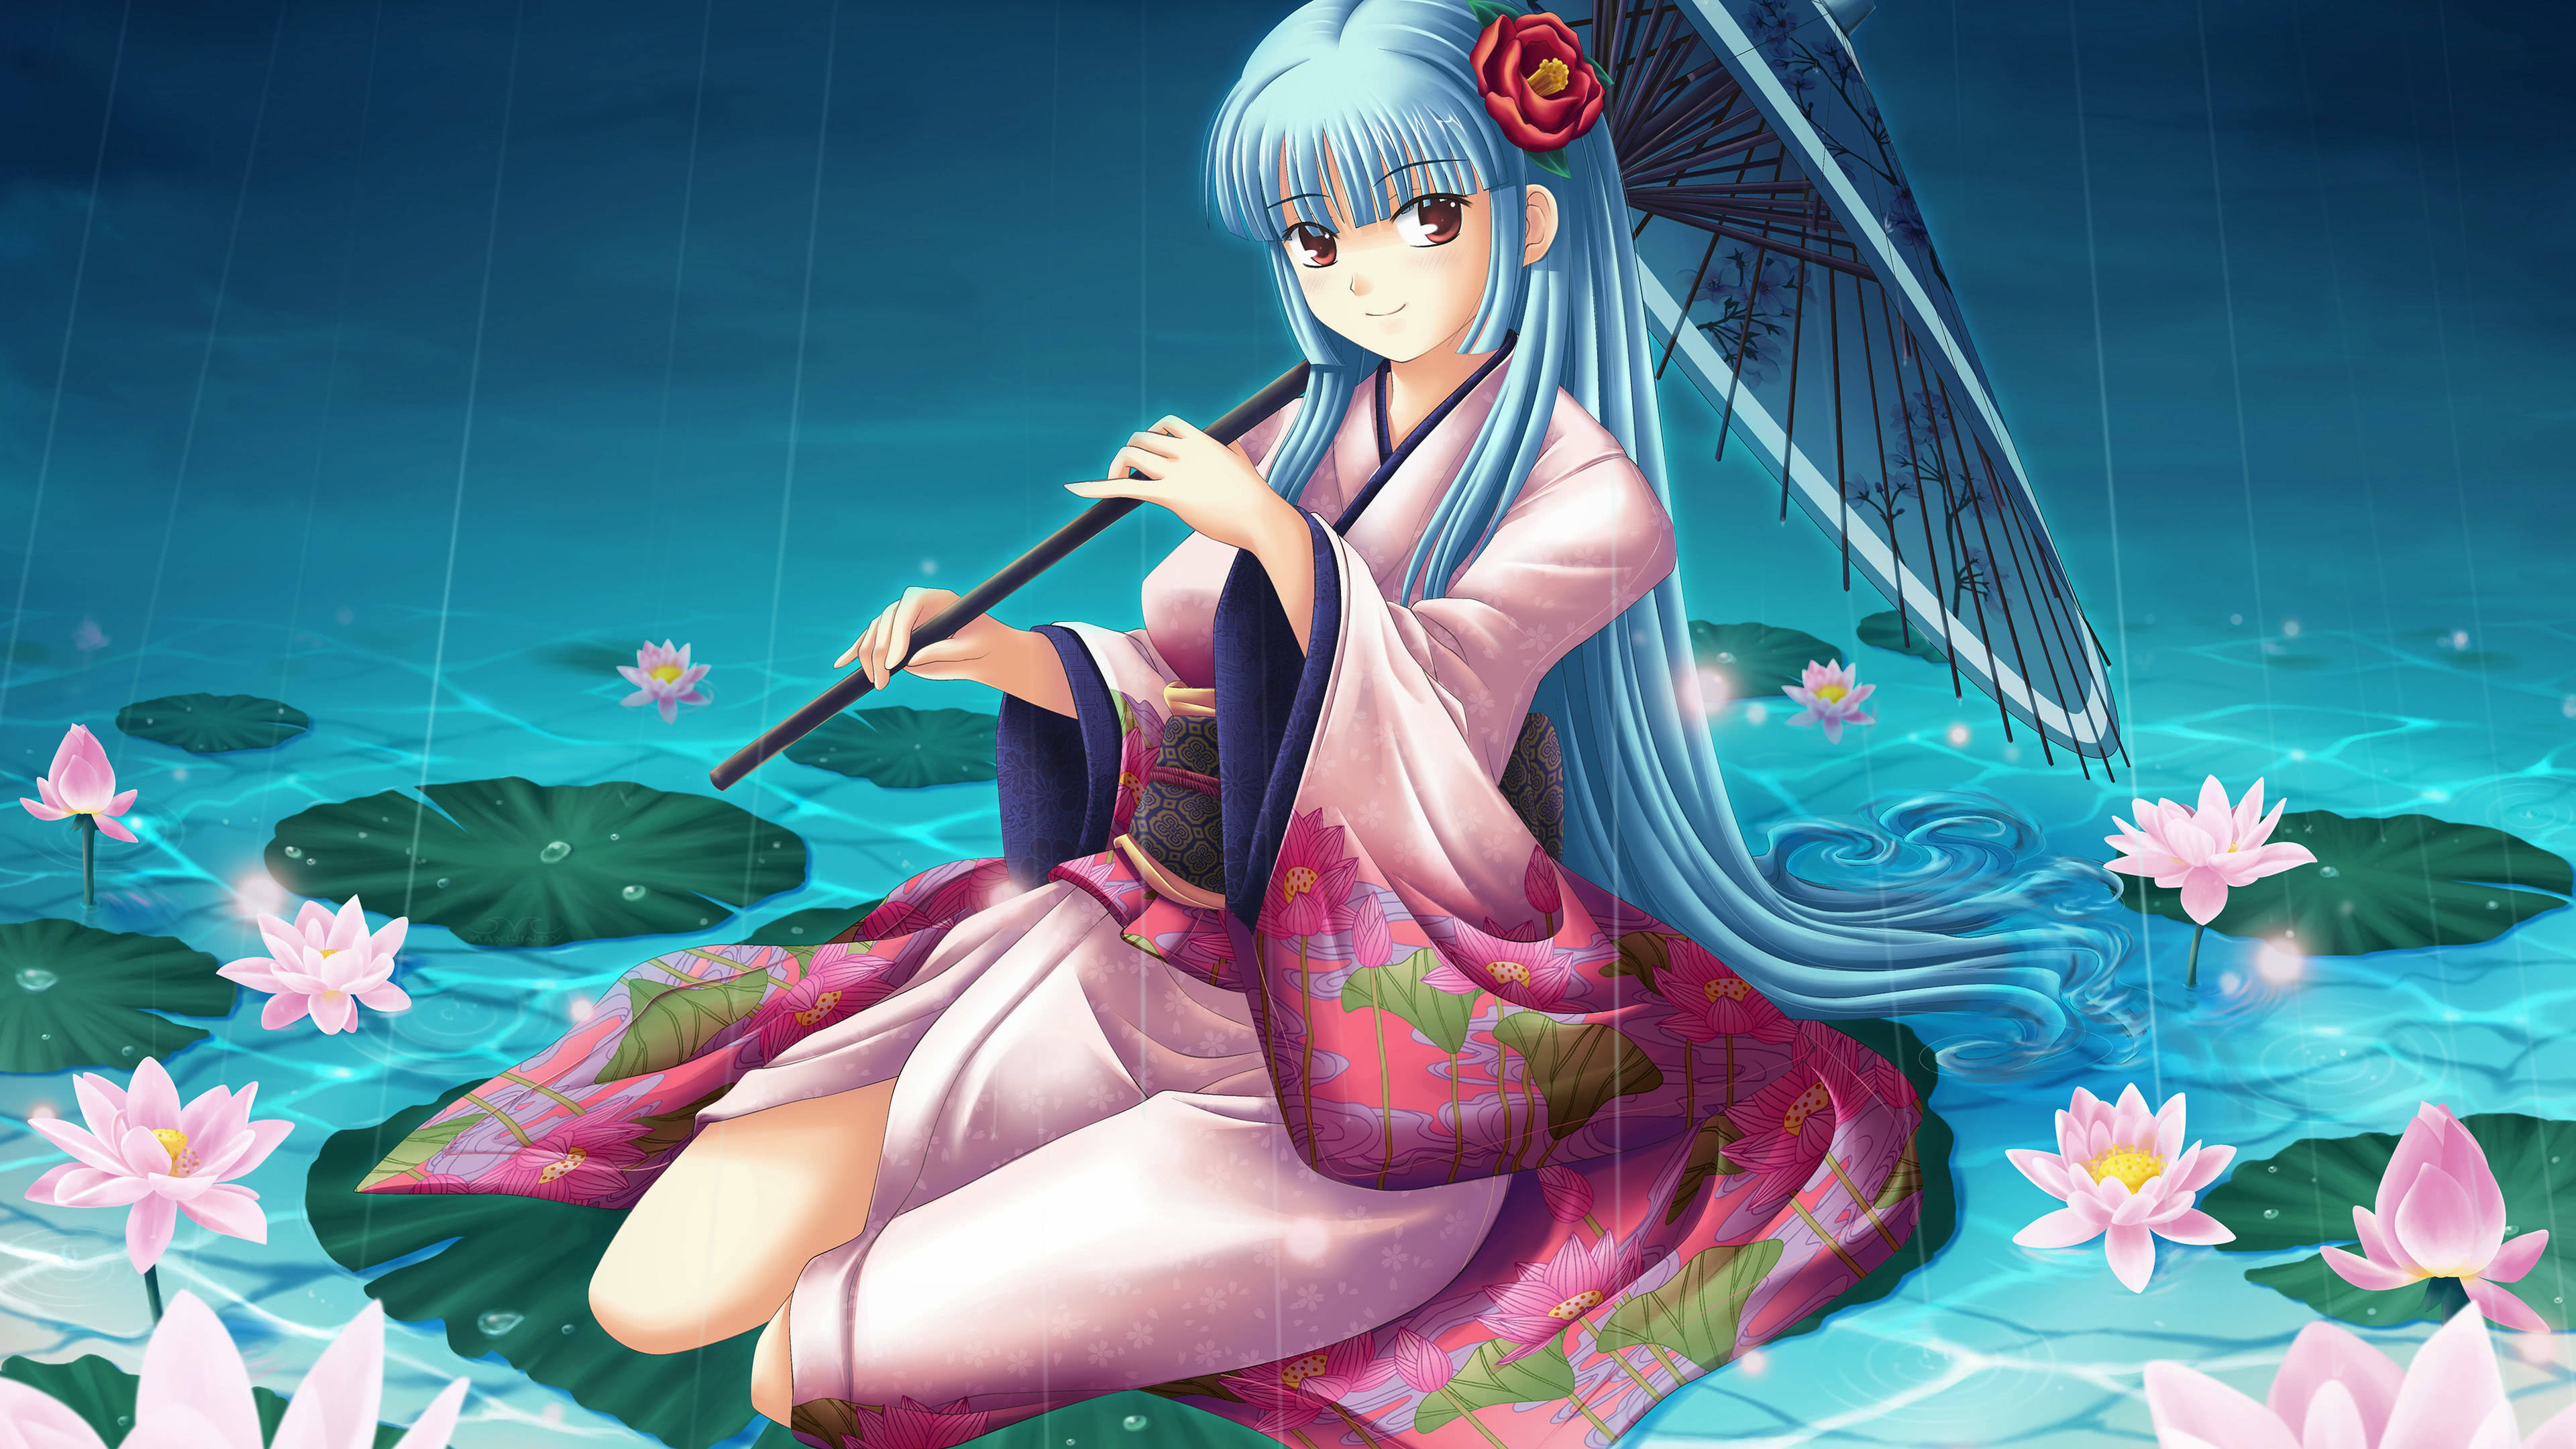 Anime Girl In Kimono On Water Lily Uhd 4k Wallpaper Pixelz Cc